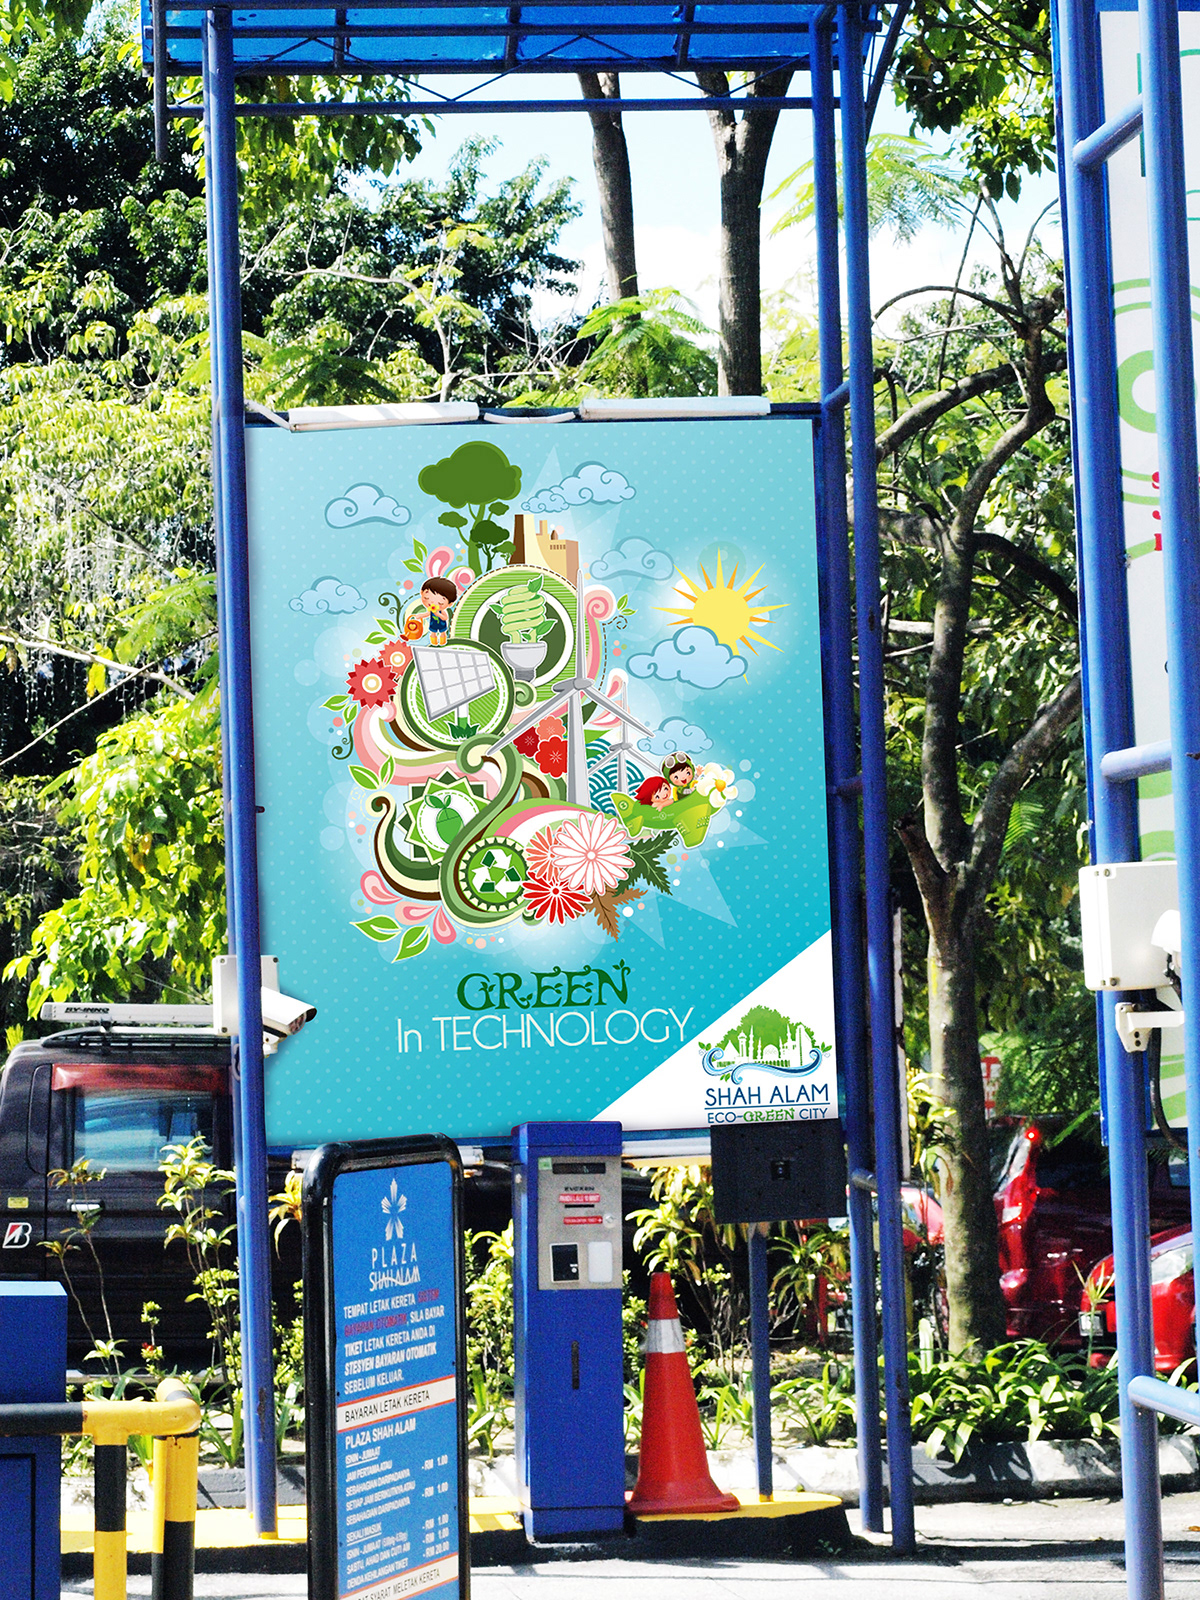 shah alam Eco-green city Vector Illustration City branding